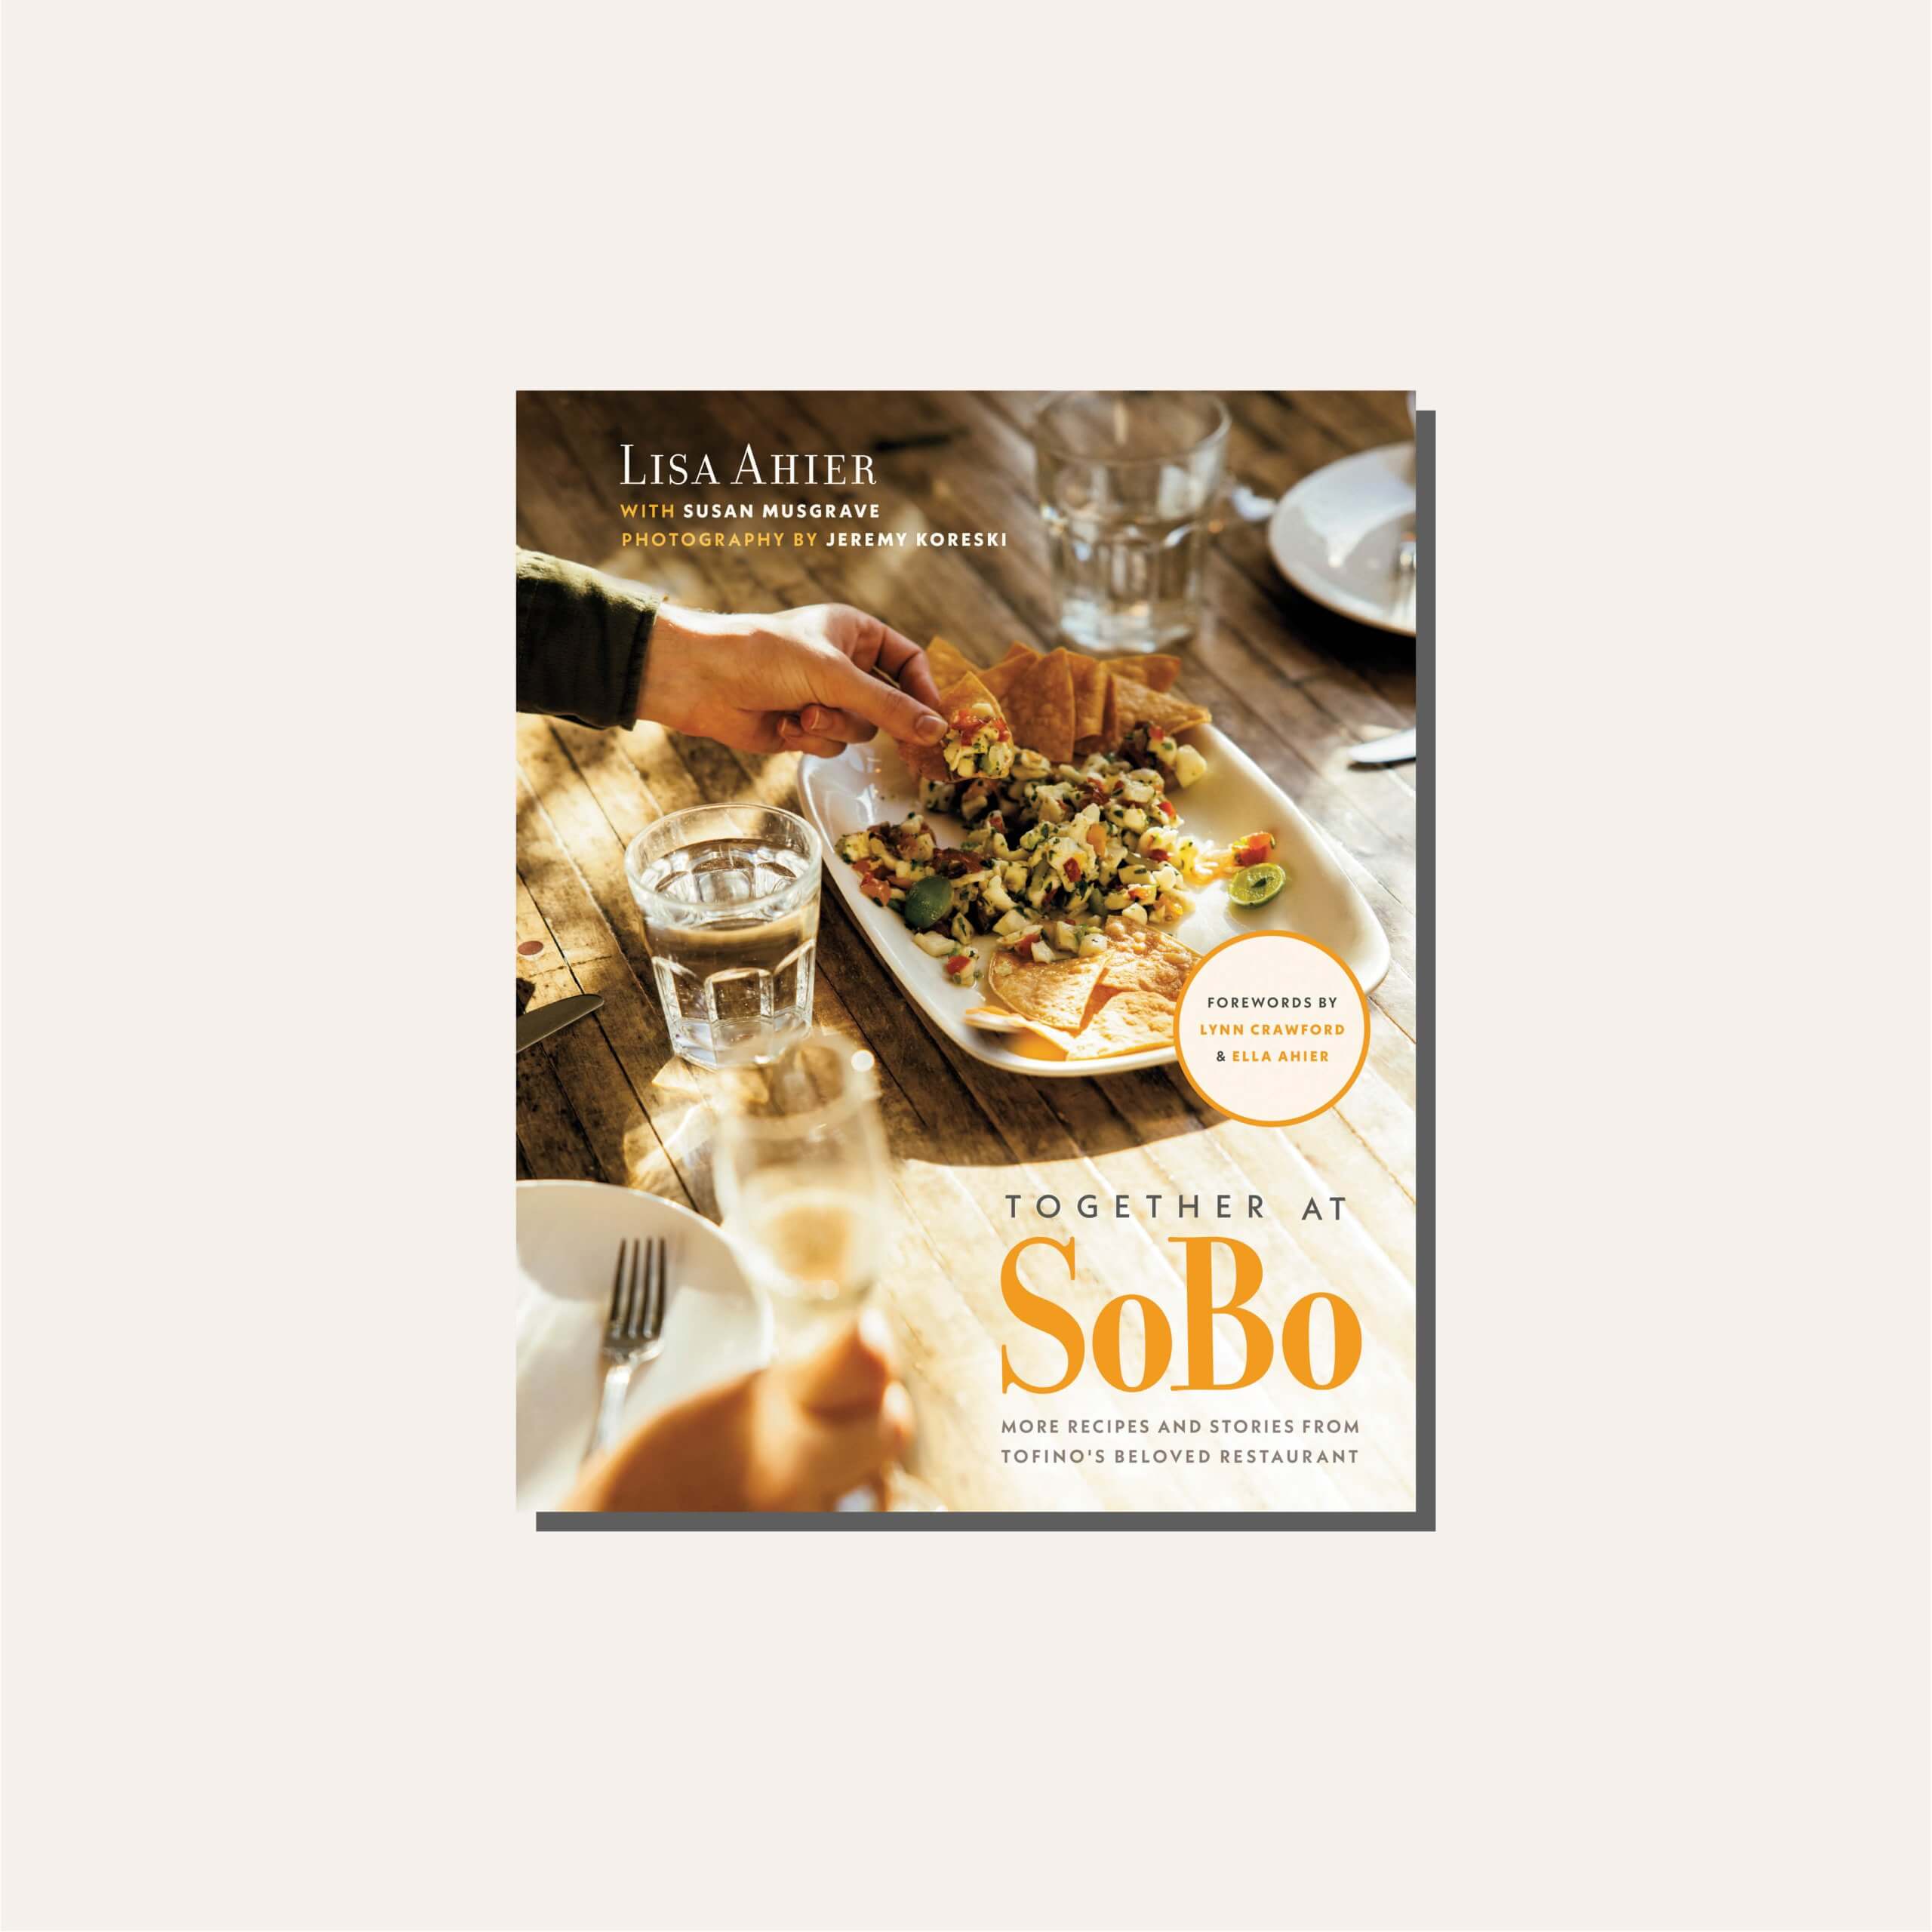 A cookbook cover in a light tan frame.